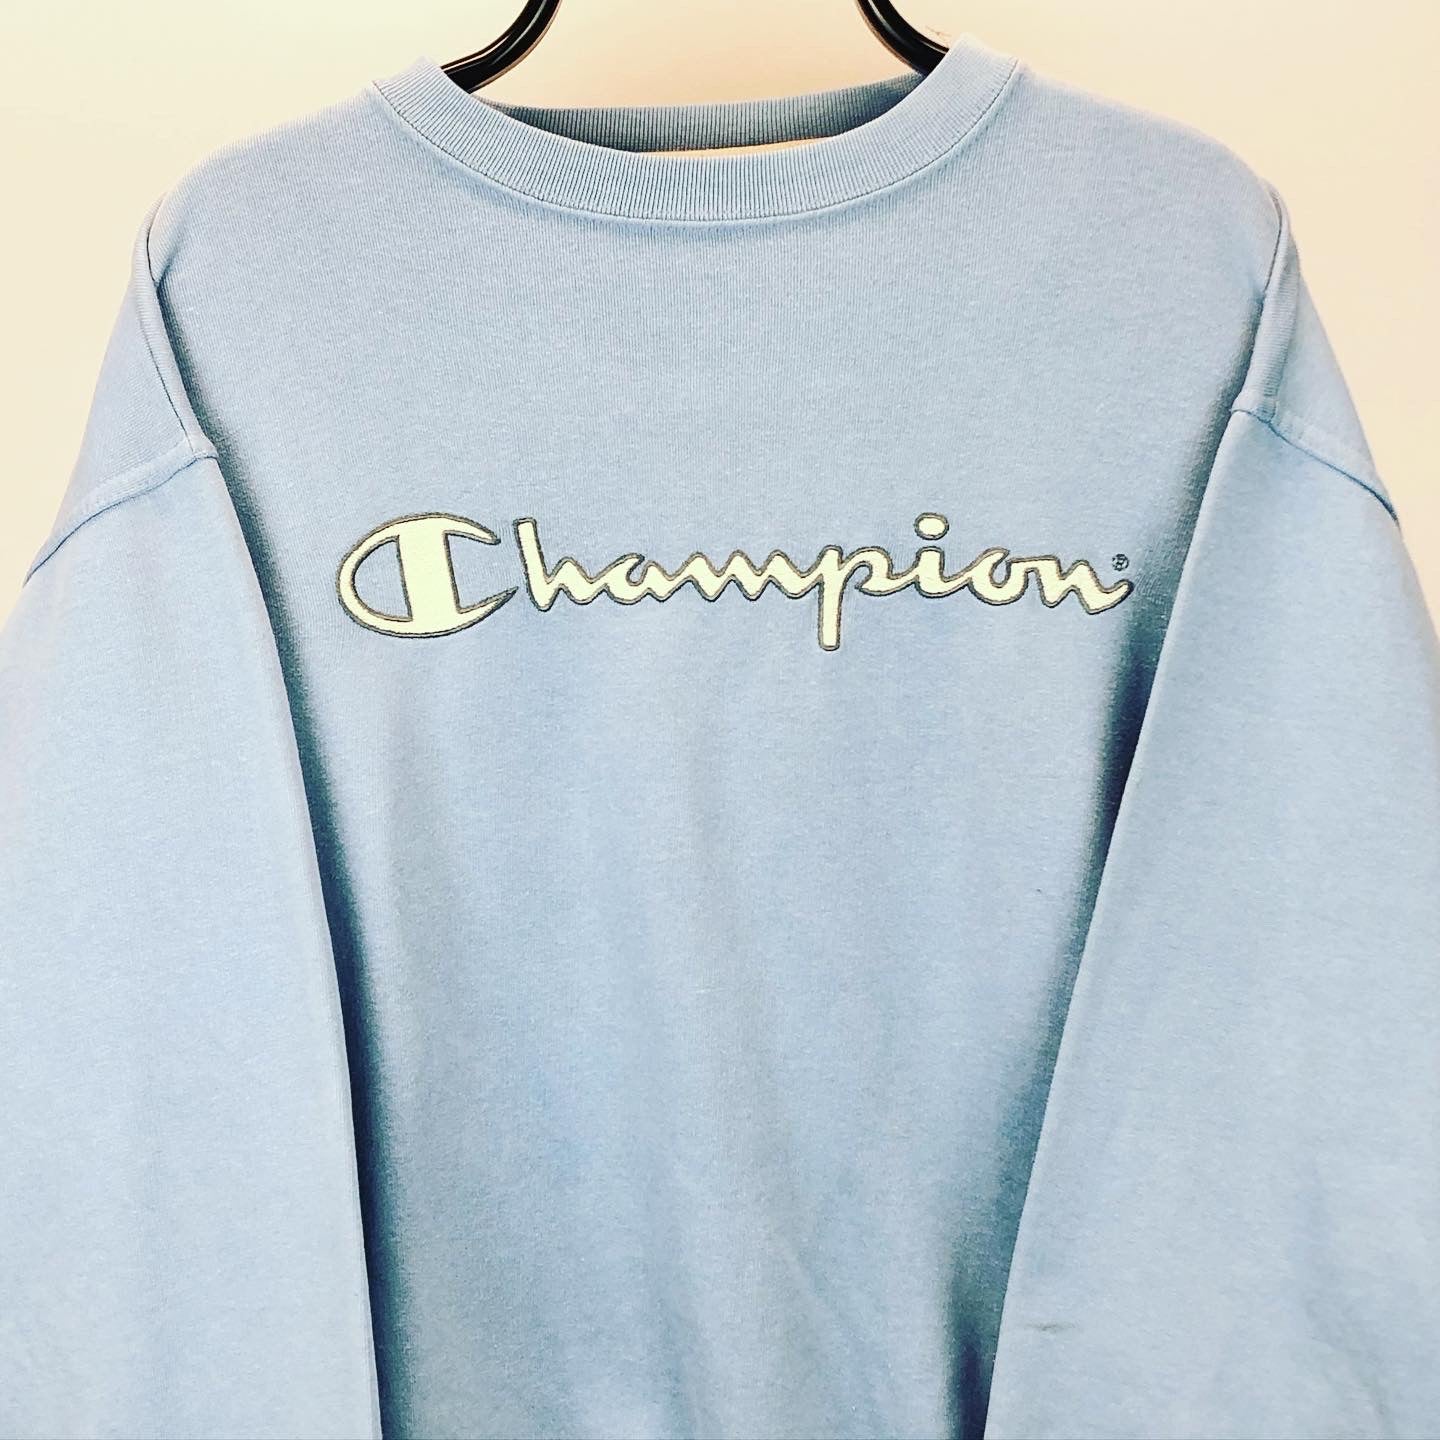 Vintage Spellout Champion Sweatshirt in Baby Blue - Men's Large/Women's XL